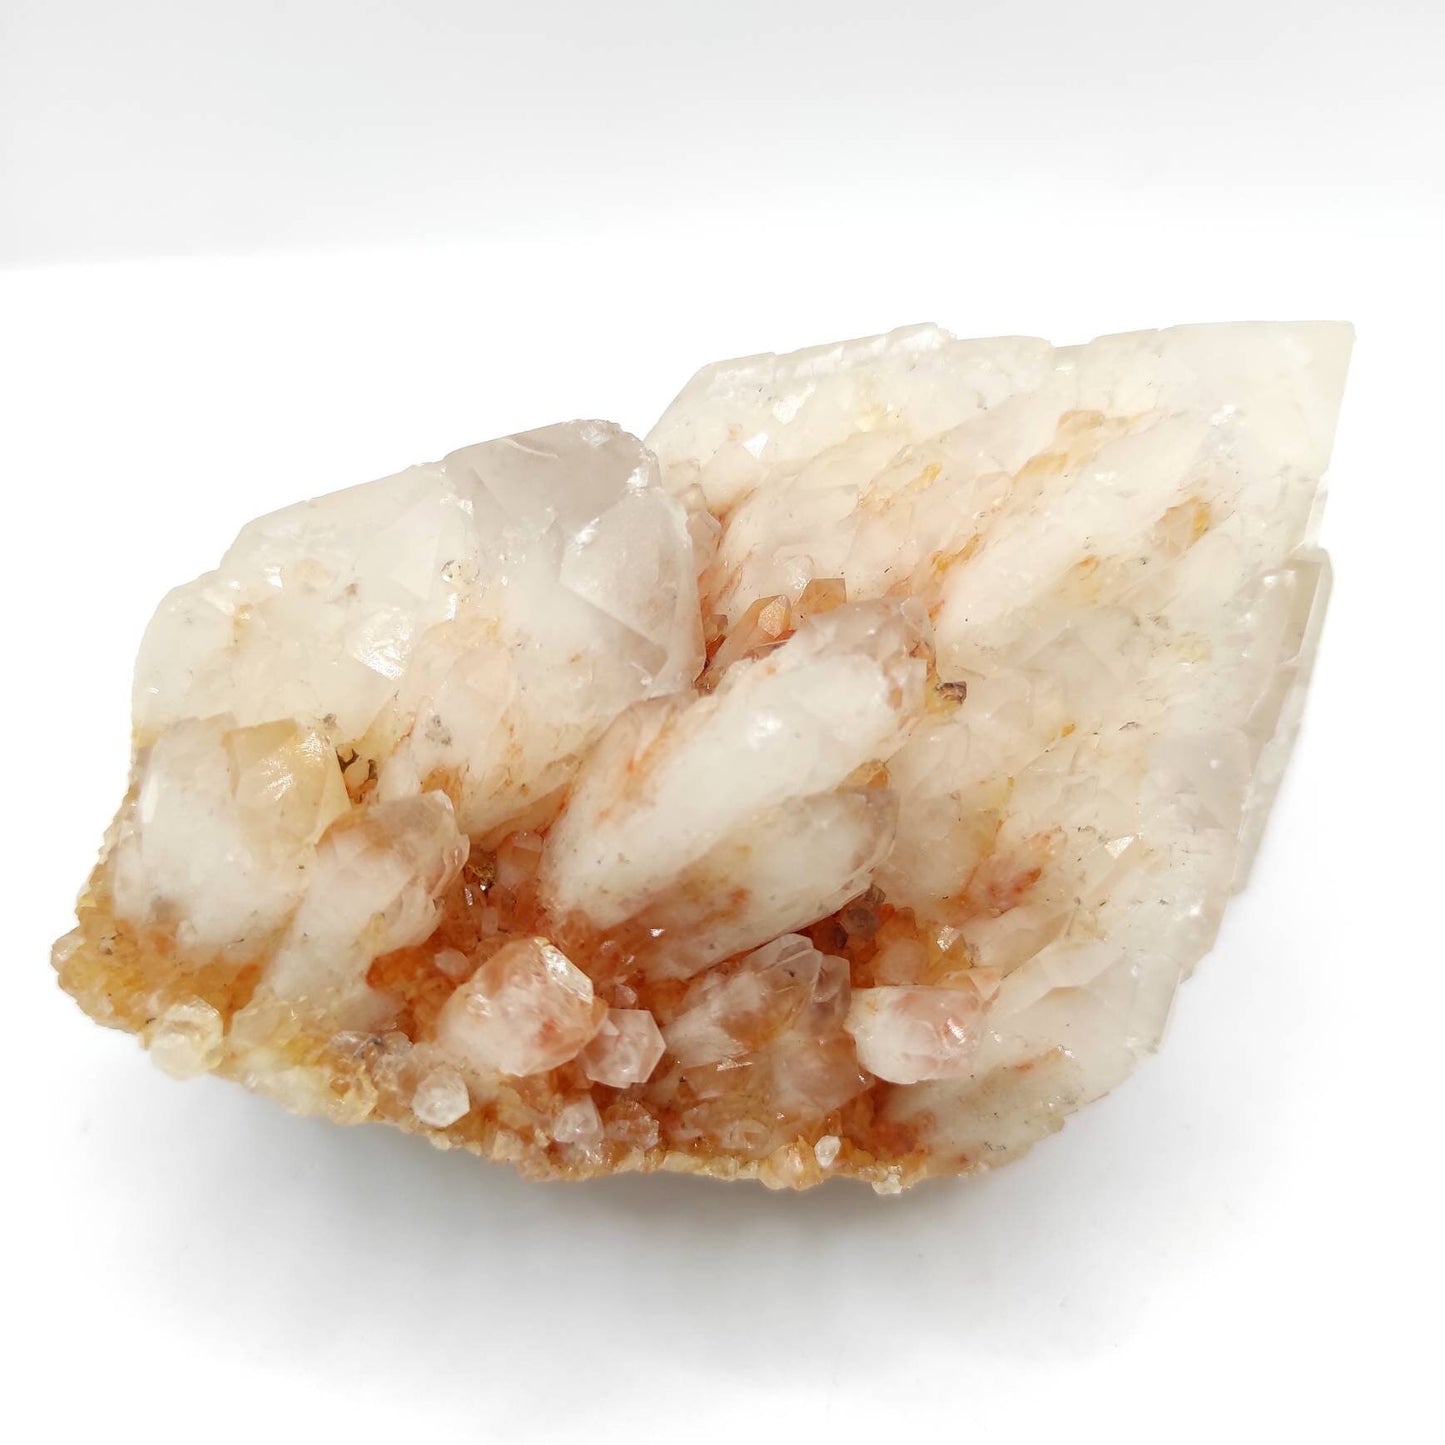 368g Candle Quartz from Madagascar - Orange "Citrine-like" Candle Quartz - Multiple Point Quartz Cluster - Raw Quartz Crystal - Natural